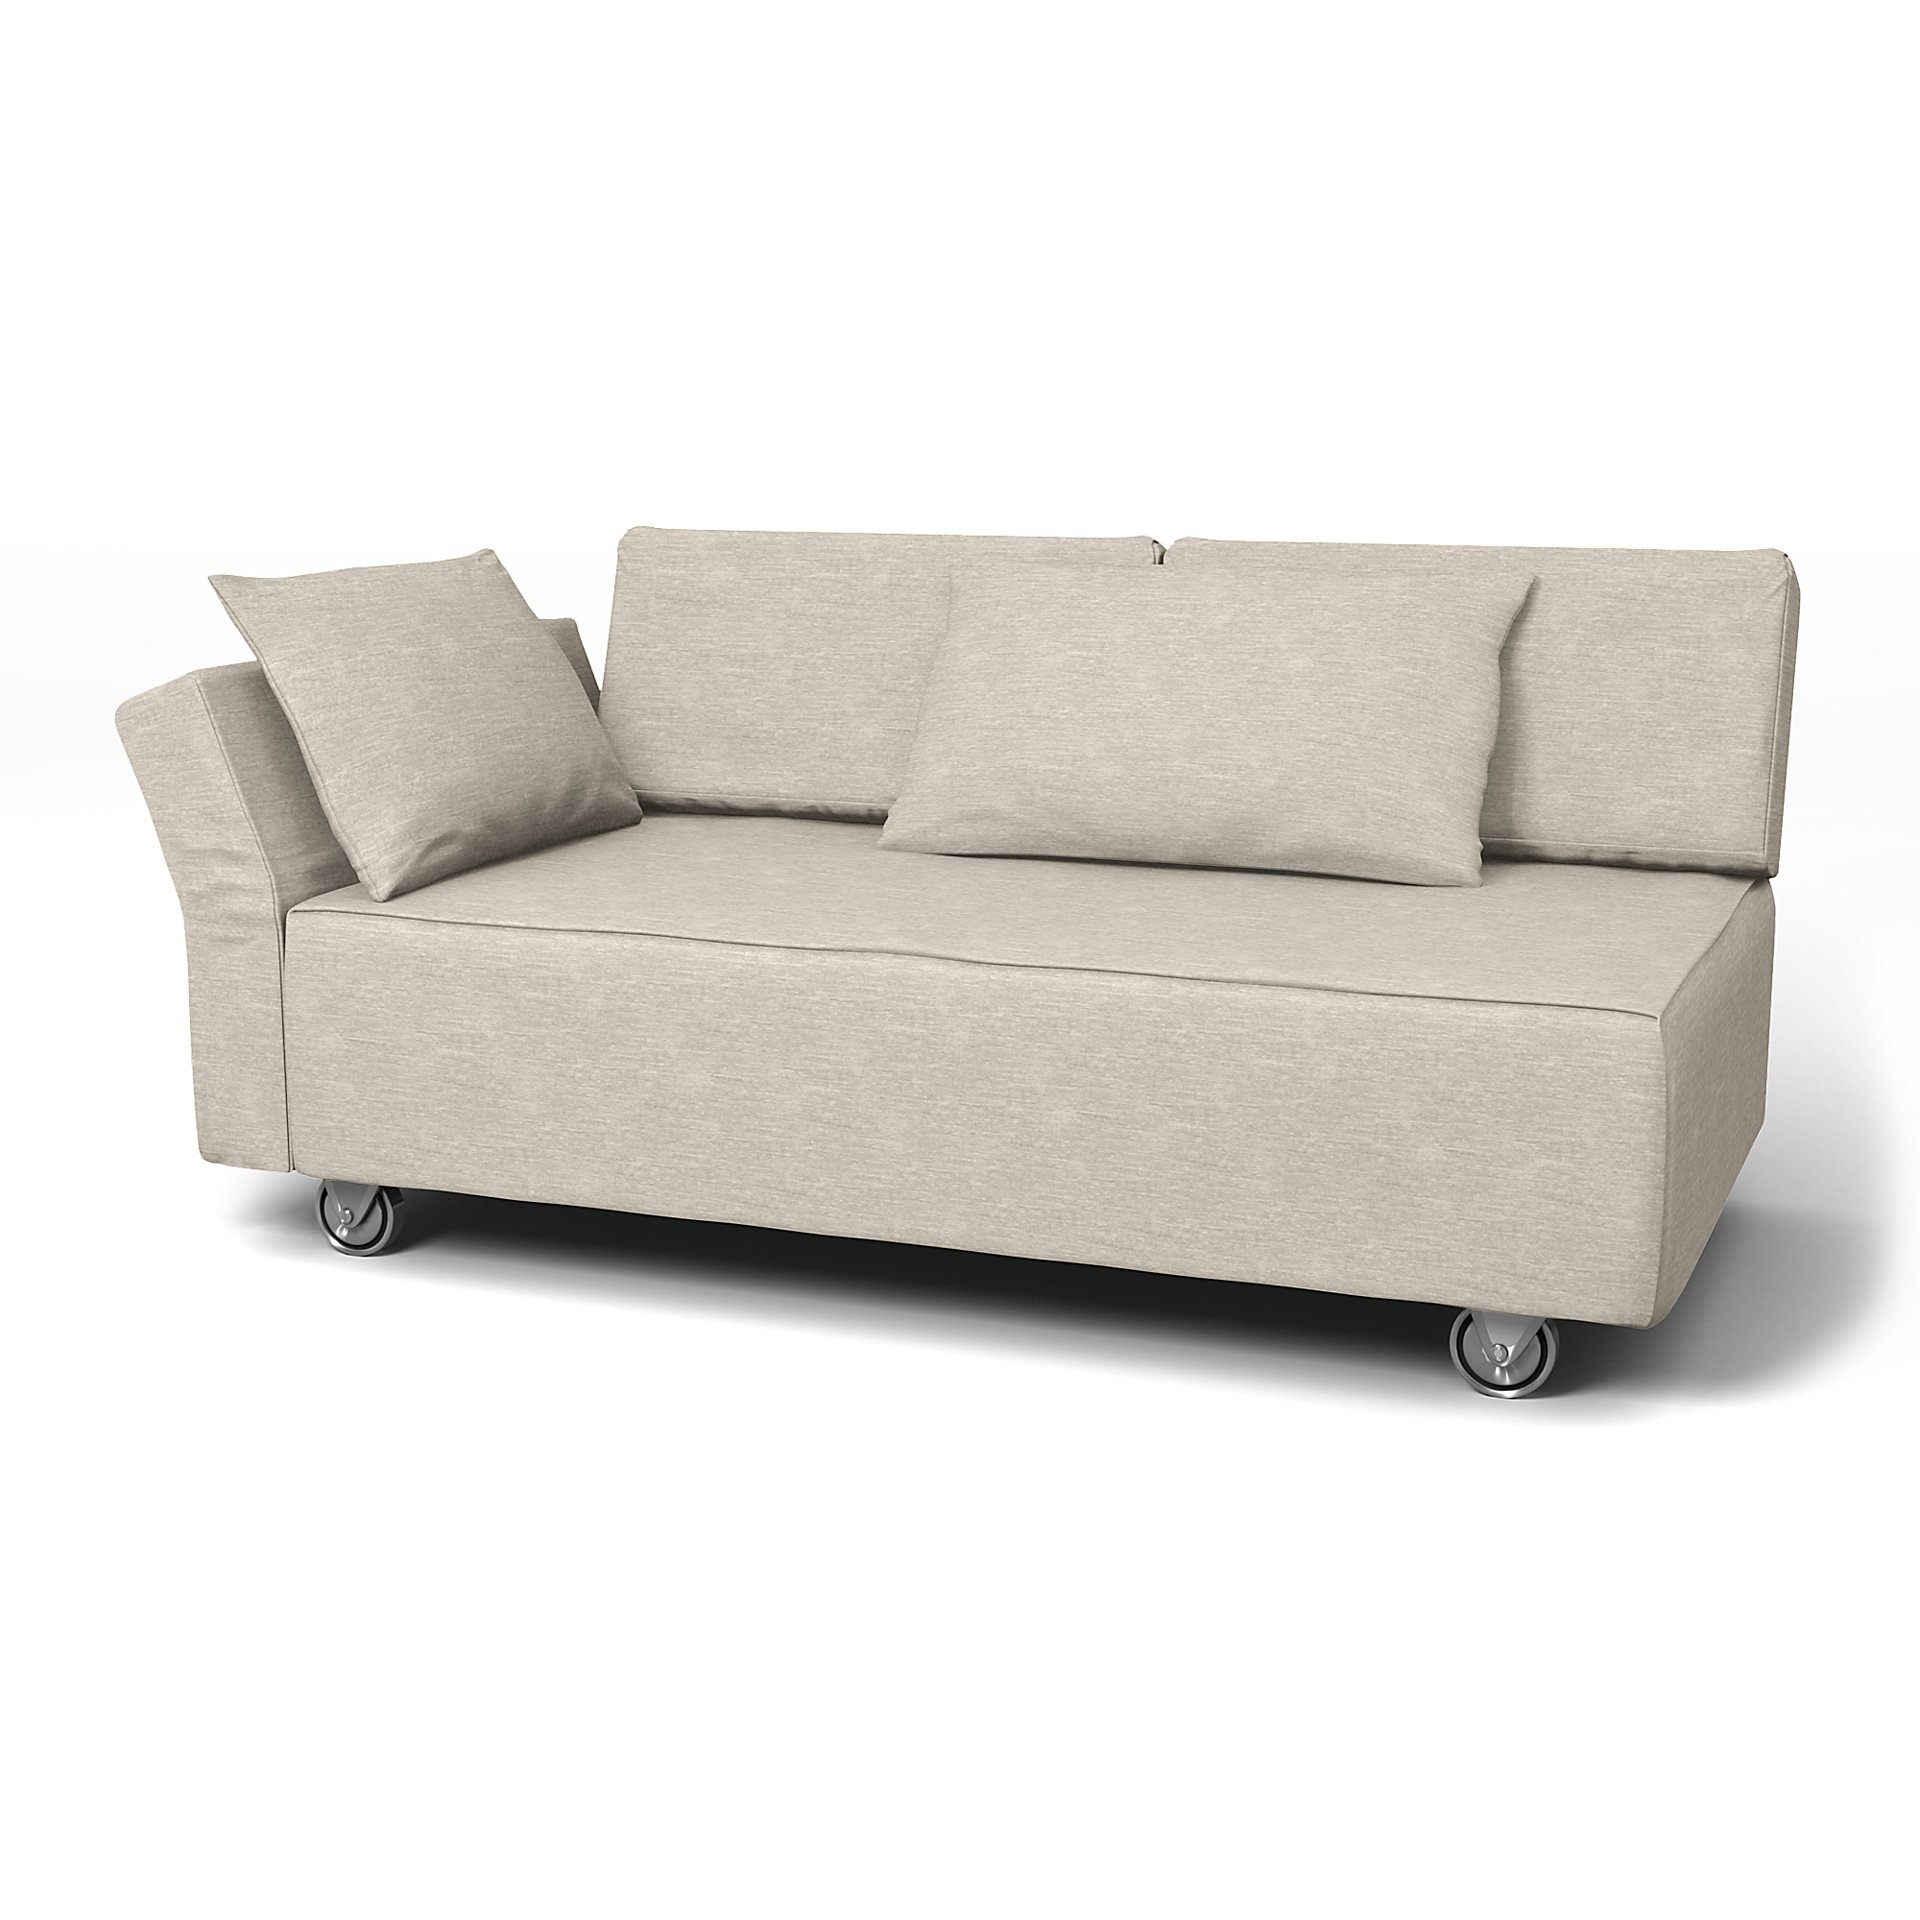 IKEA - Falsterbo 2 Seat Sofa with Left Arm Cover, Natural White, Velvet - Bemz